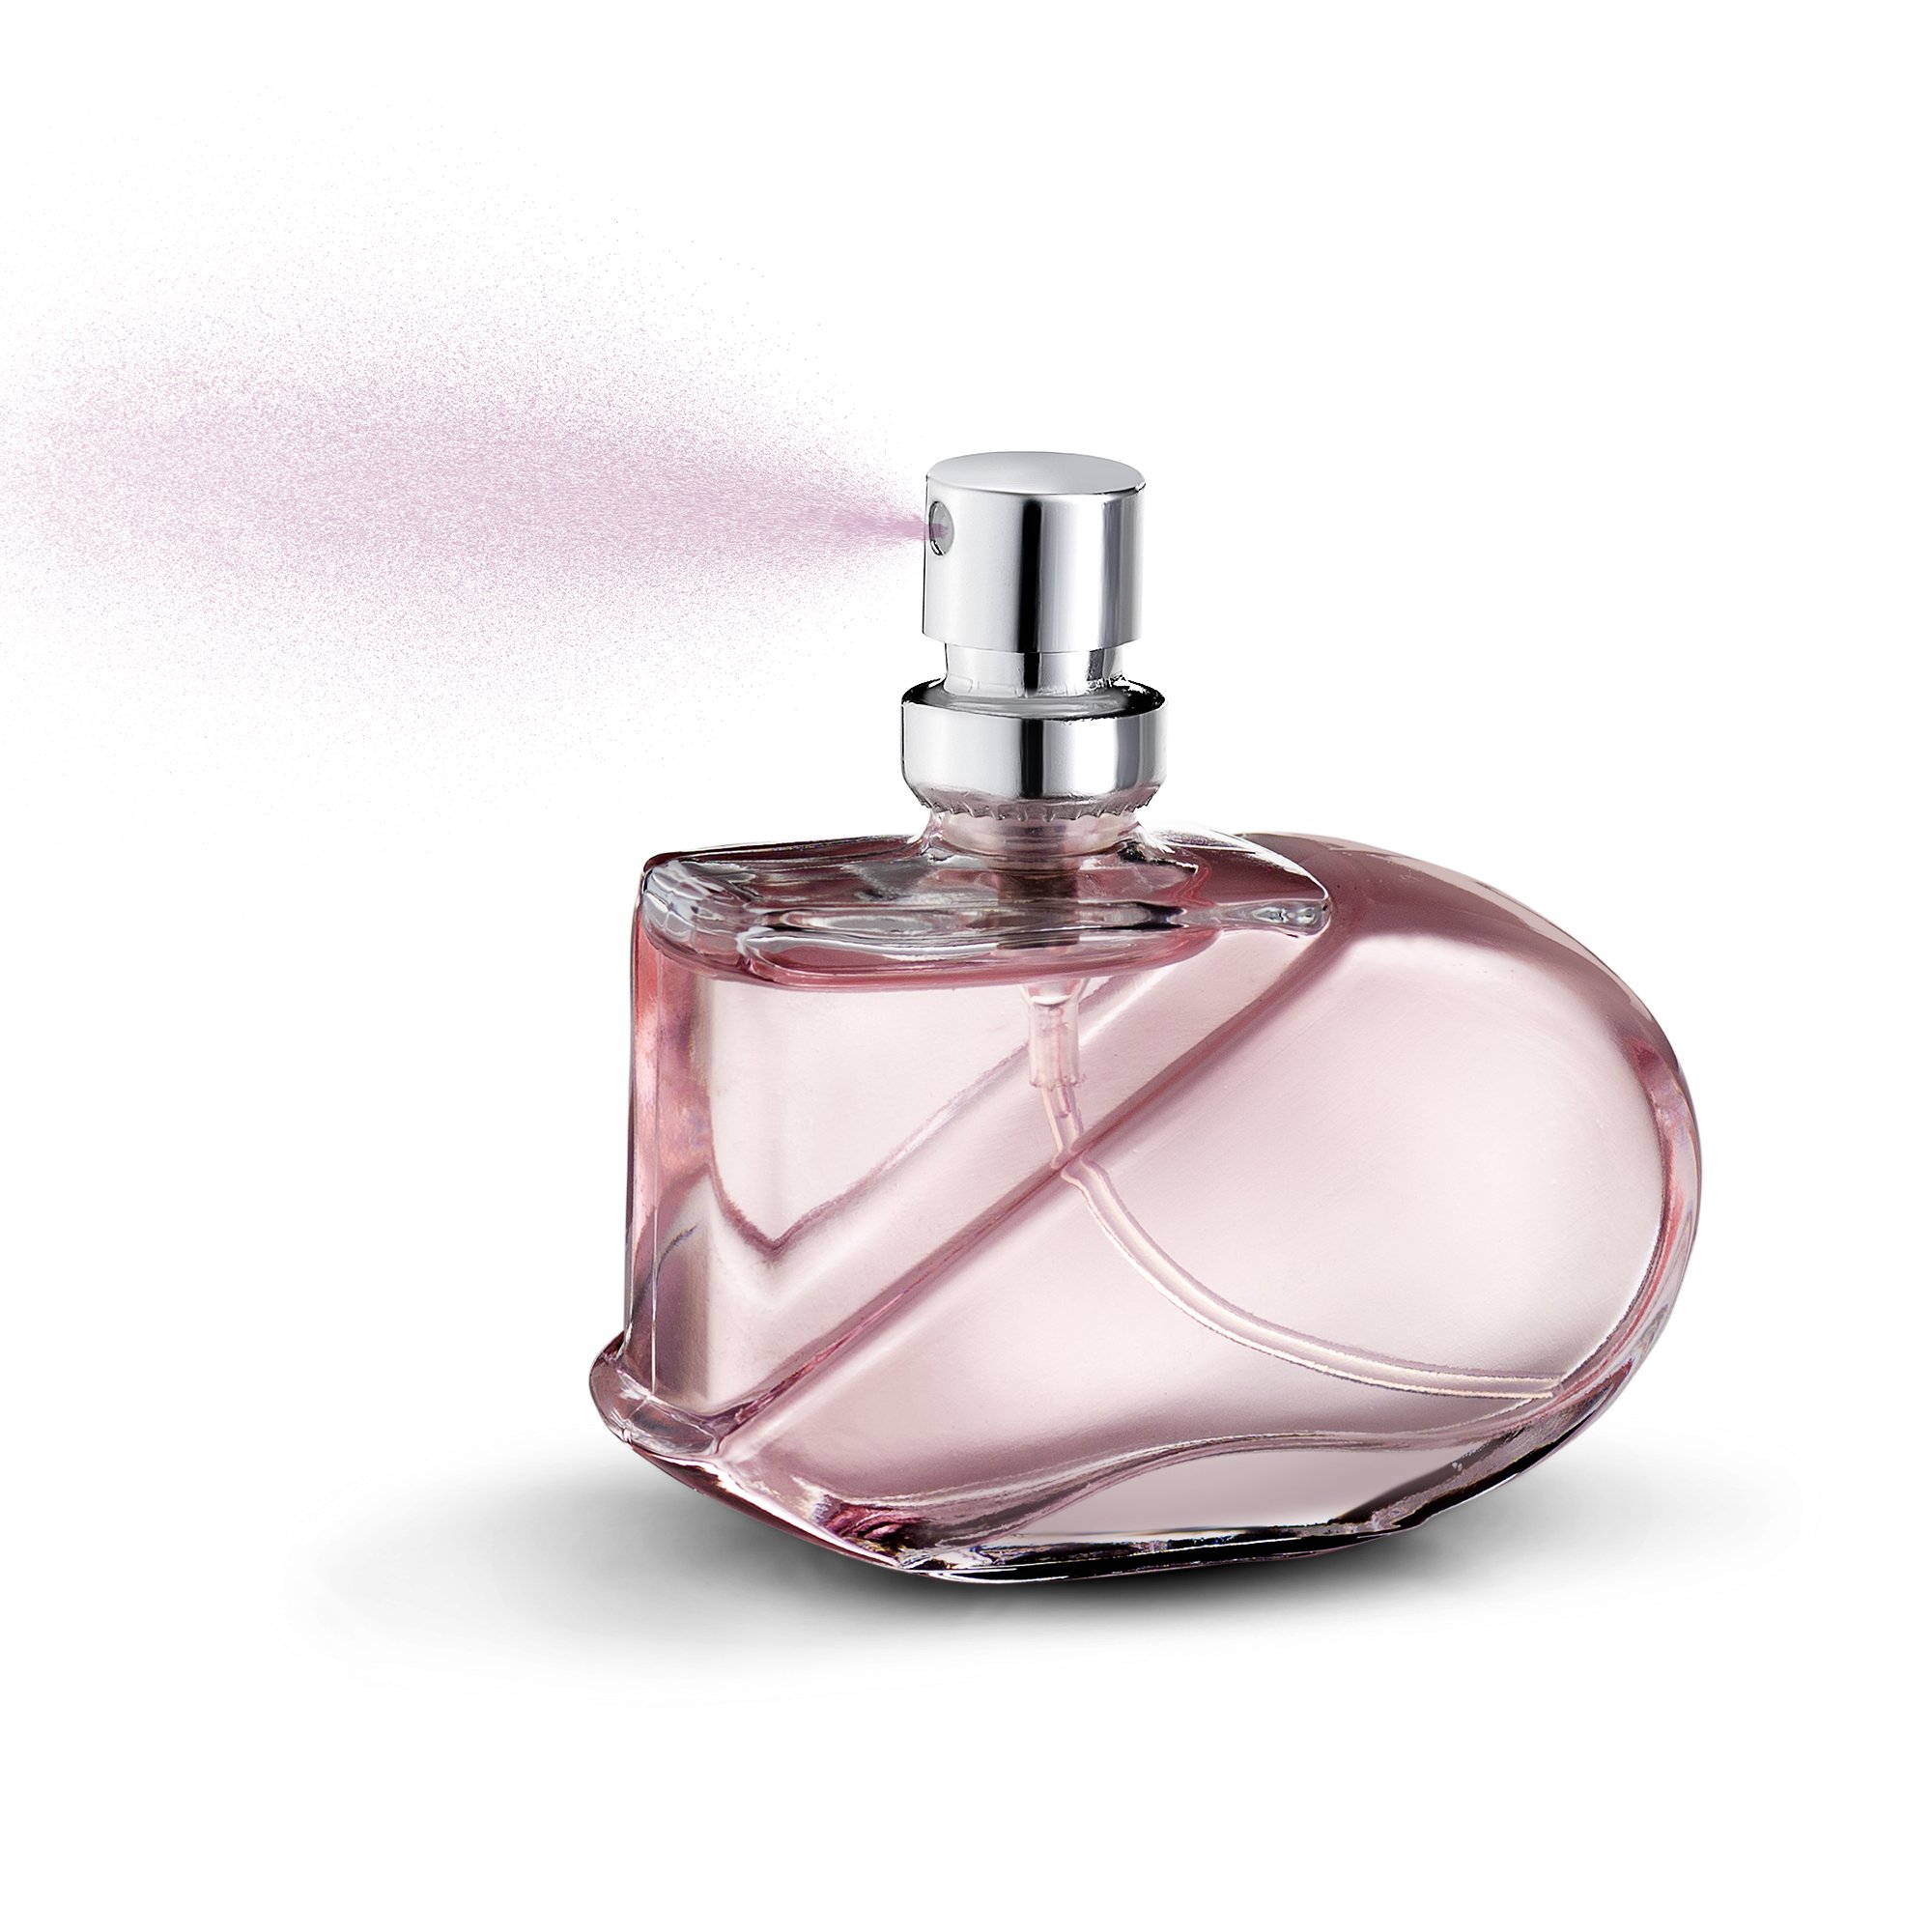 SCENTED THINGS Crush Body Spray Girl Perfume, Eau De Parfum Teen Girl Gifts, Heart-Shaped Bottles, 4 Piece Set